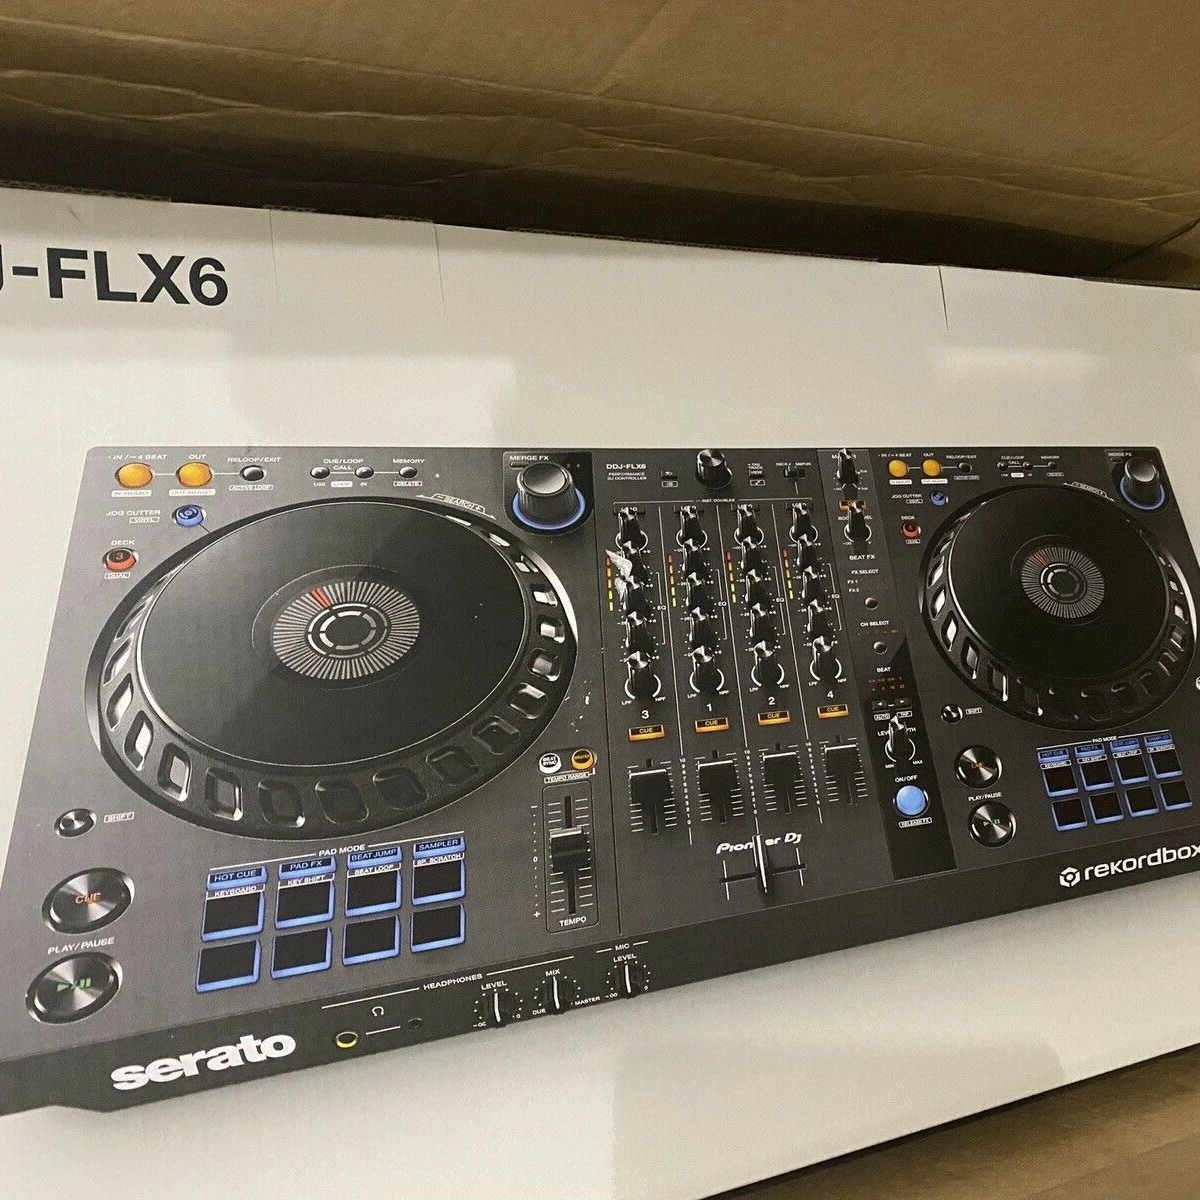 Best Sales For Original Pioneer DJ DDJ-FLX6 4-deck Rekordbox and Serato DJ Controller